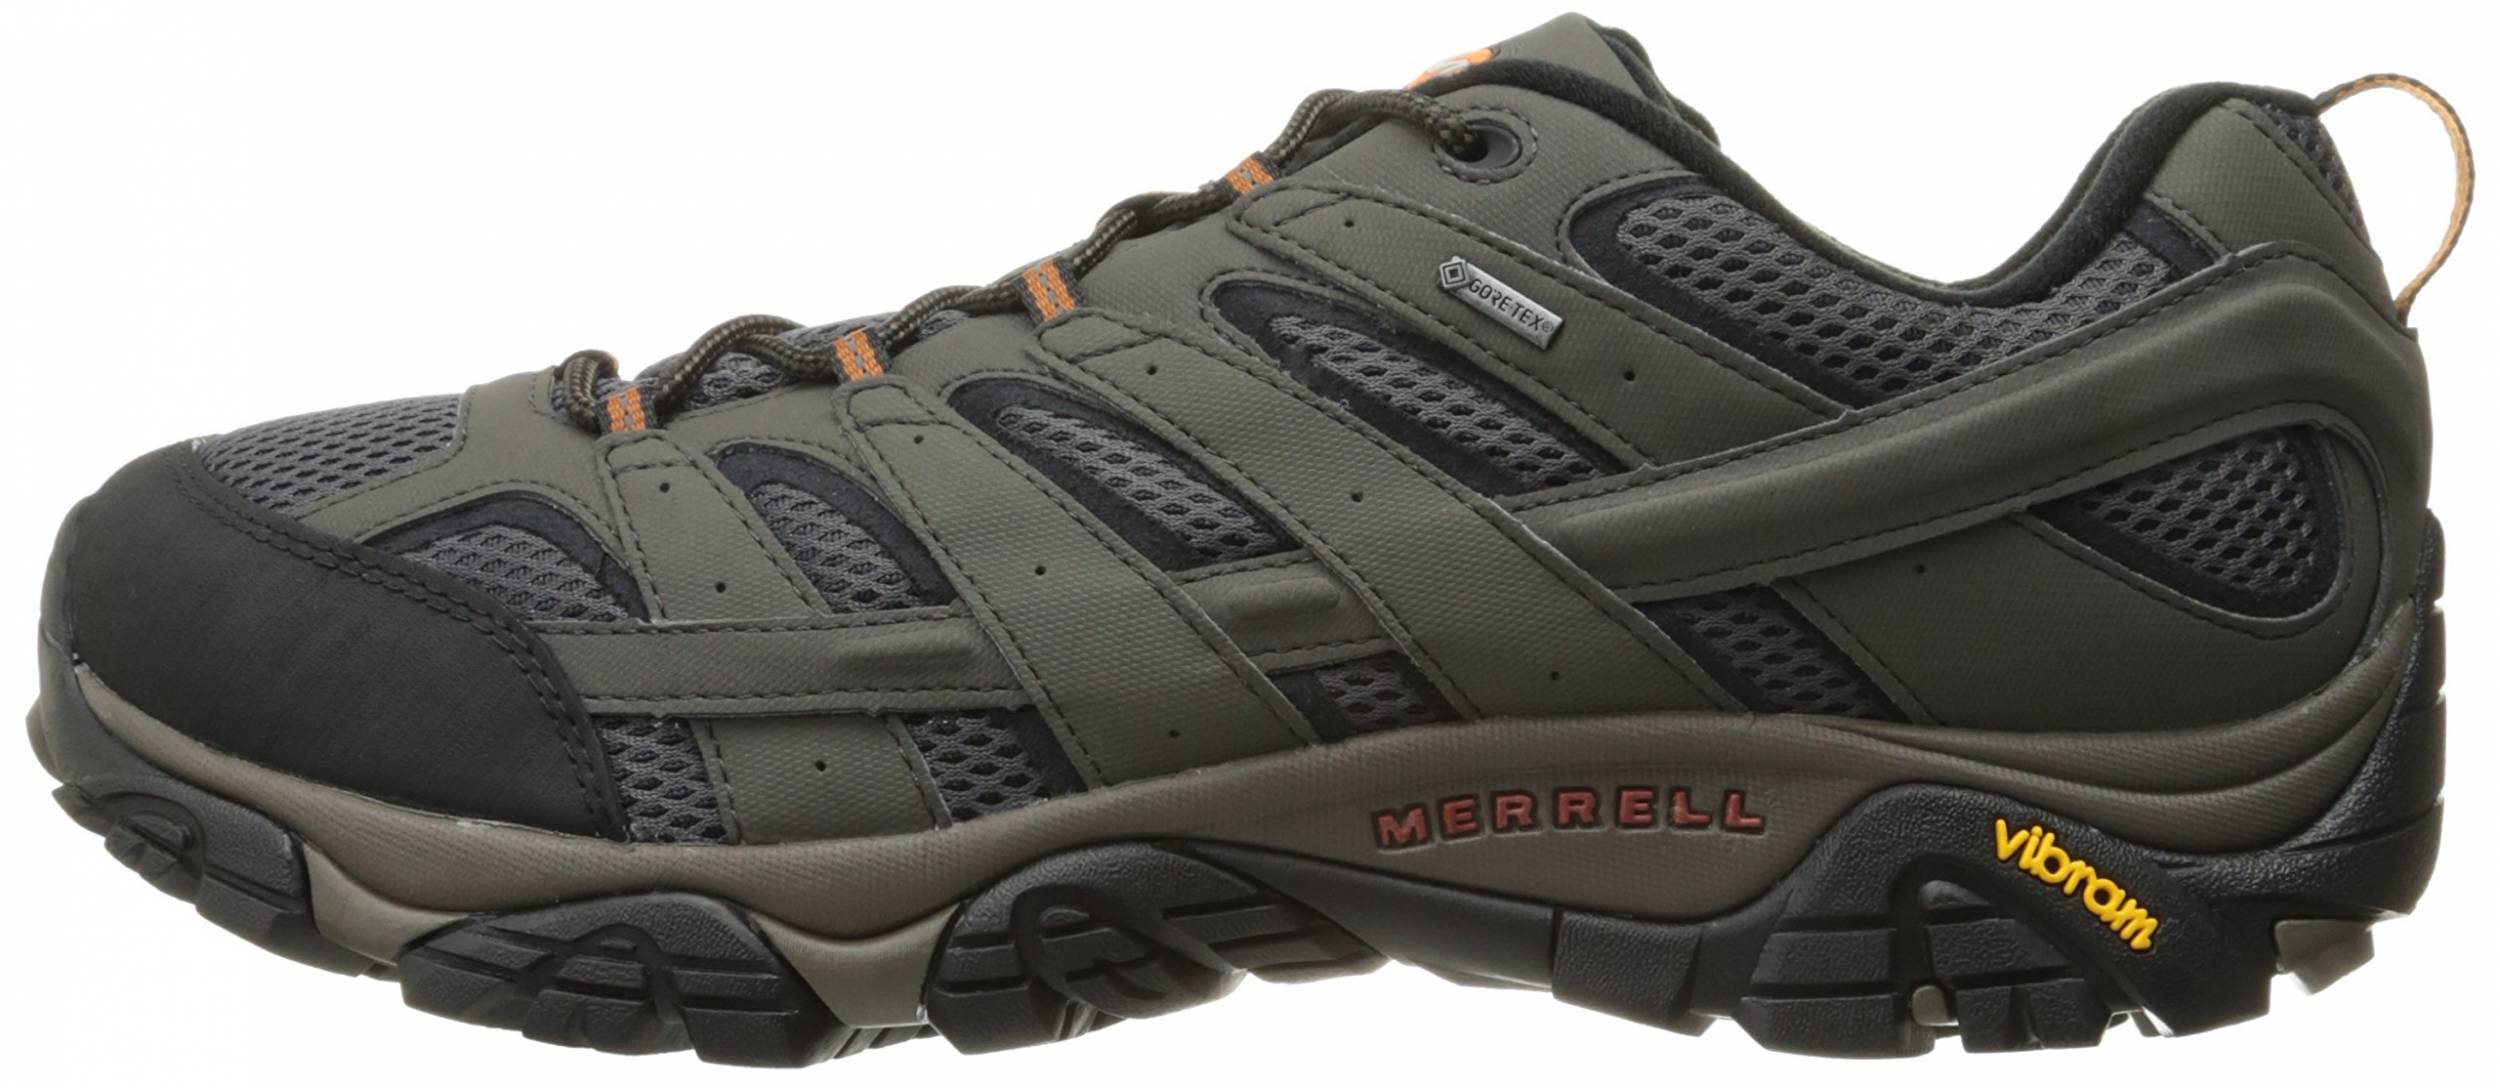 Merrell Moab 2 GTX Gore-Tex Vibram II Men Outdoors Trail Hiking Shoes Pick 1 